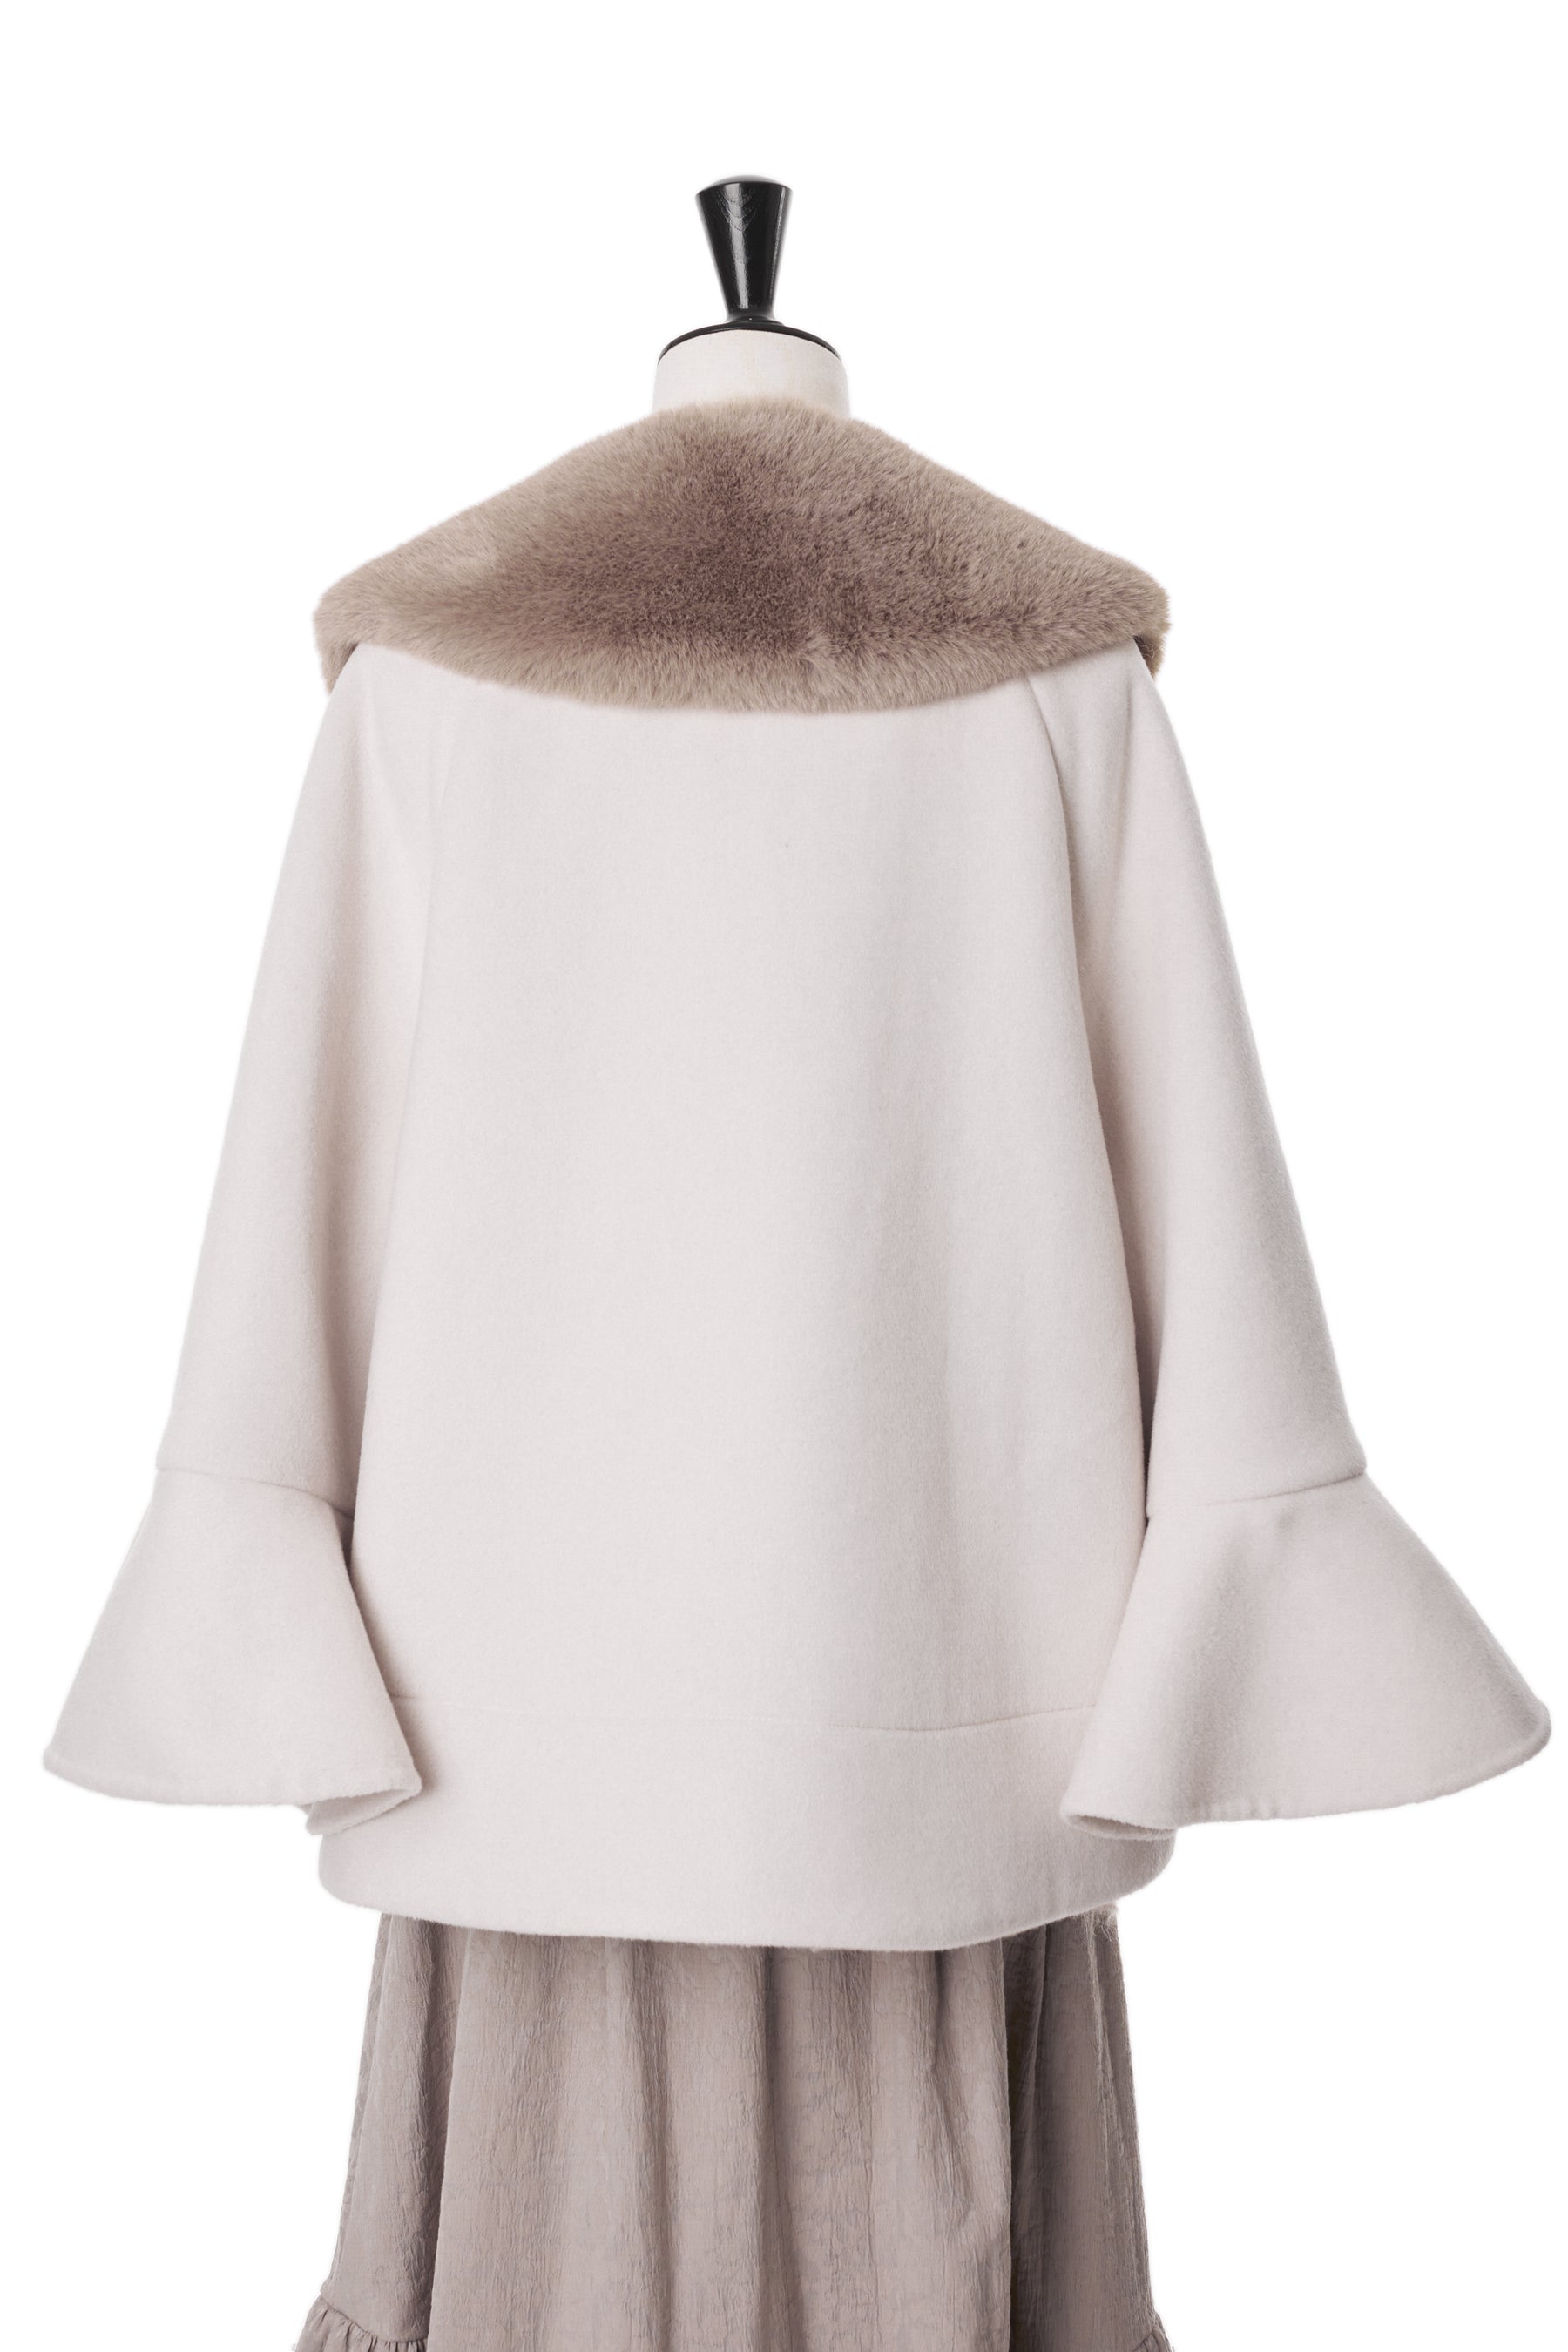 herliptoConvertible Faux Fur Tippet Coat